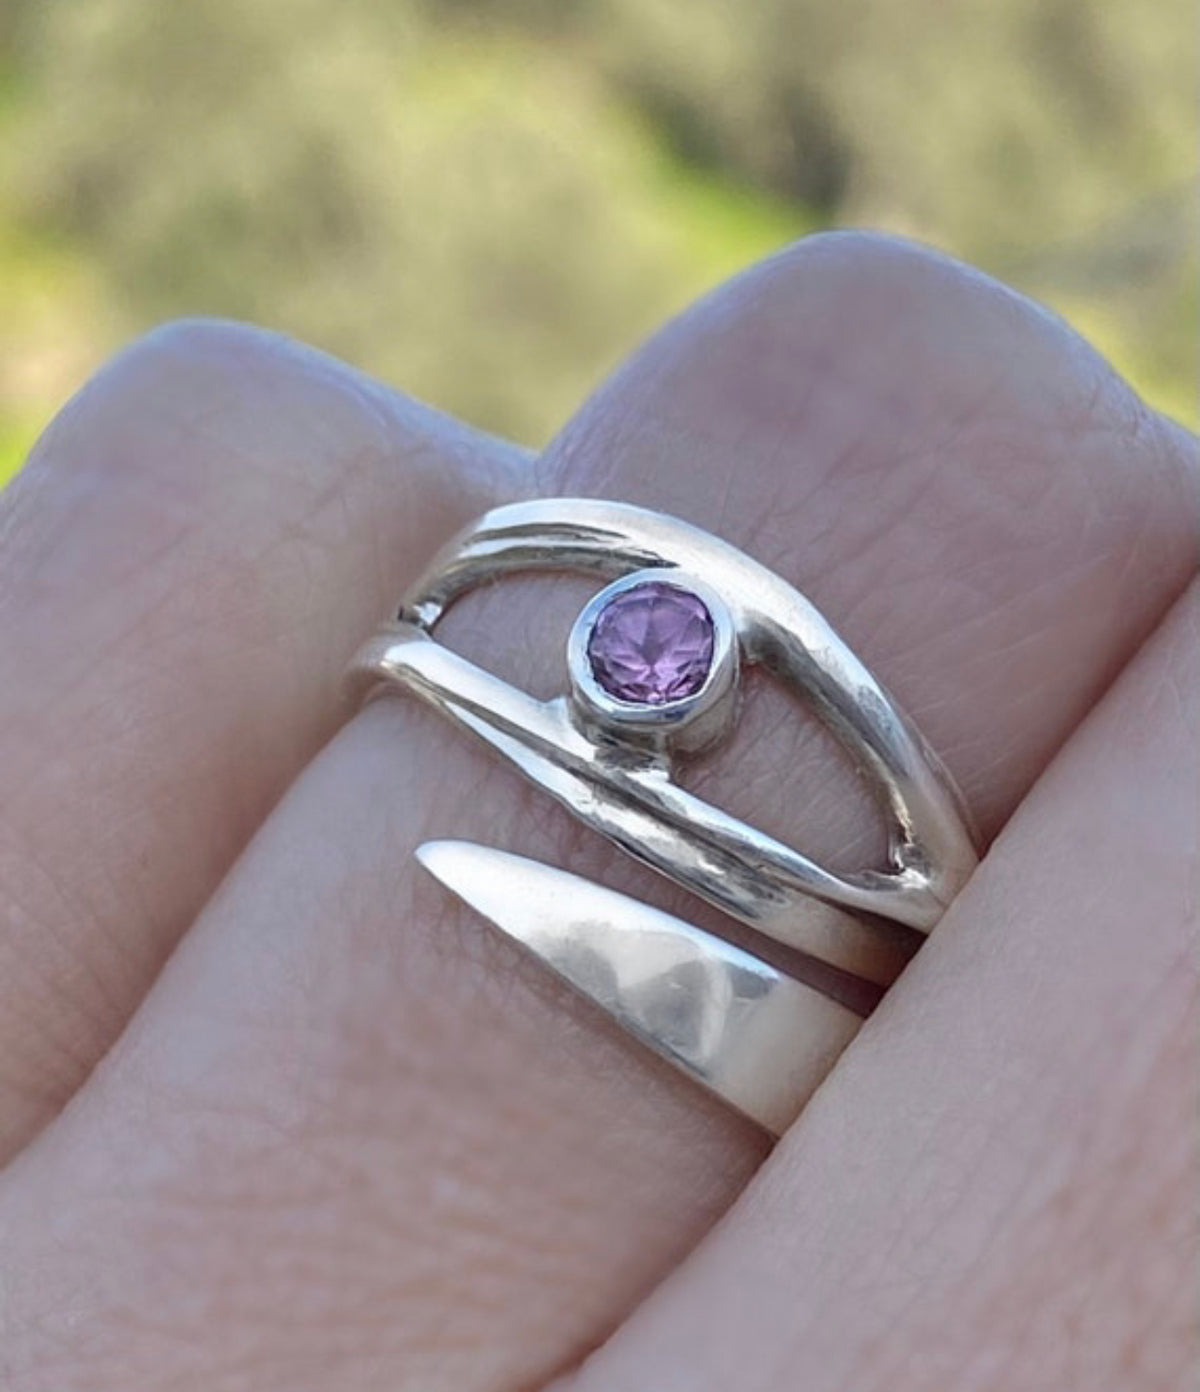 evil eye ring with pink tourmaline